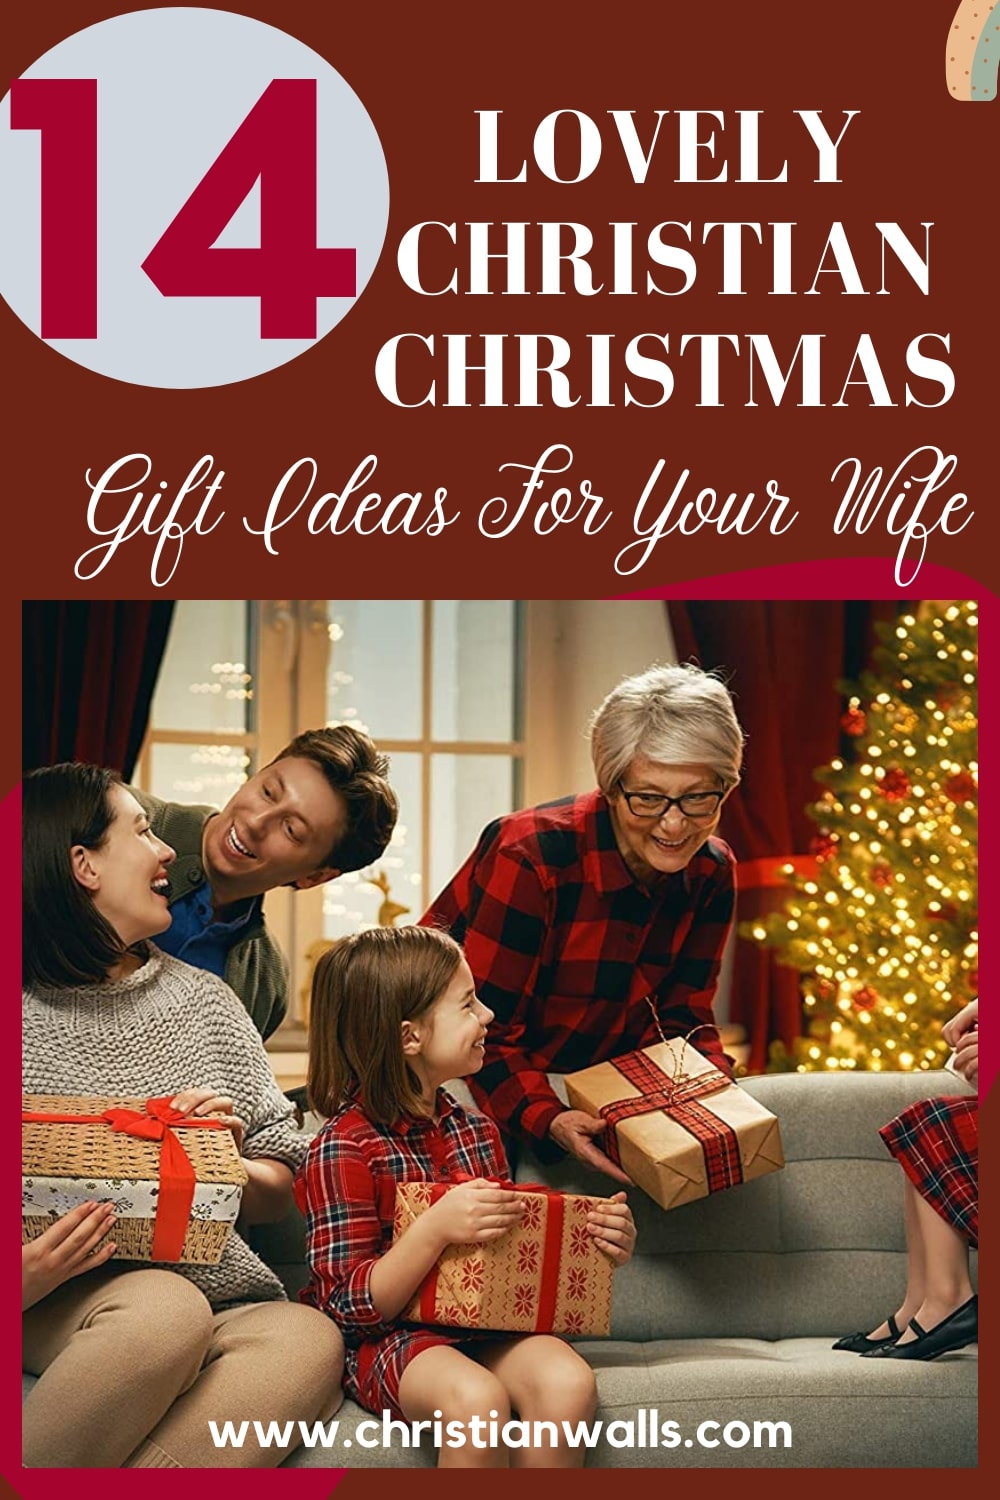 FILO ESTILO Christmas Religious Gifts for Women or Men, Bible